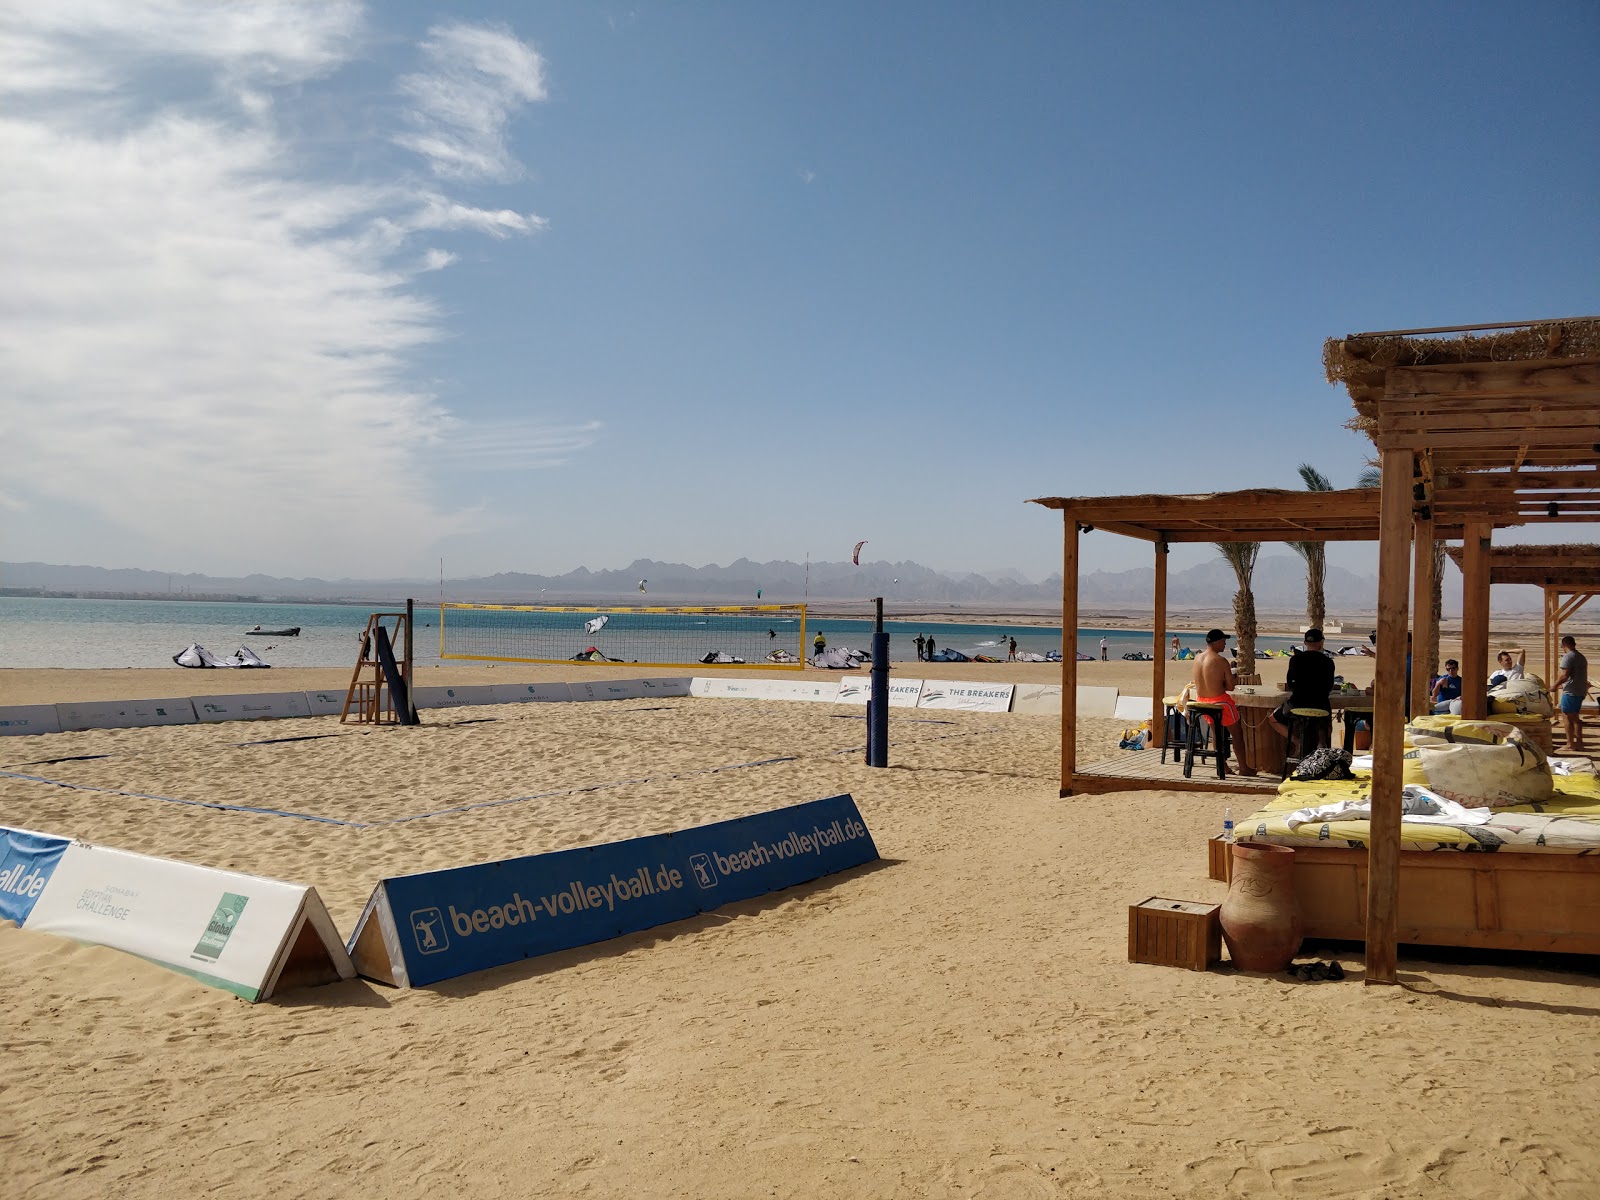 Foto de Mesca Beach - lugar popular entre os apreciadores de relaxamento